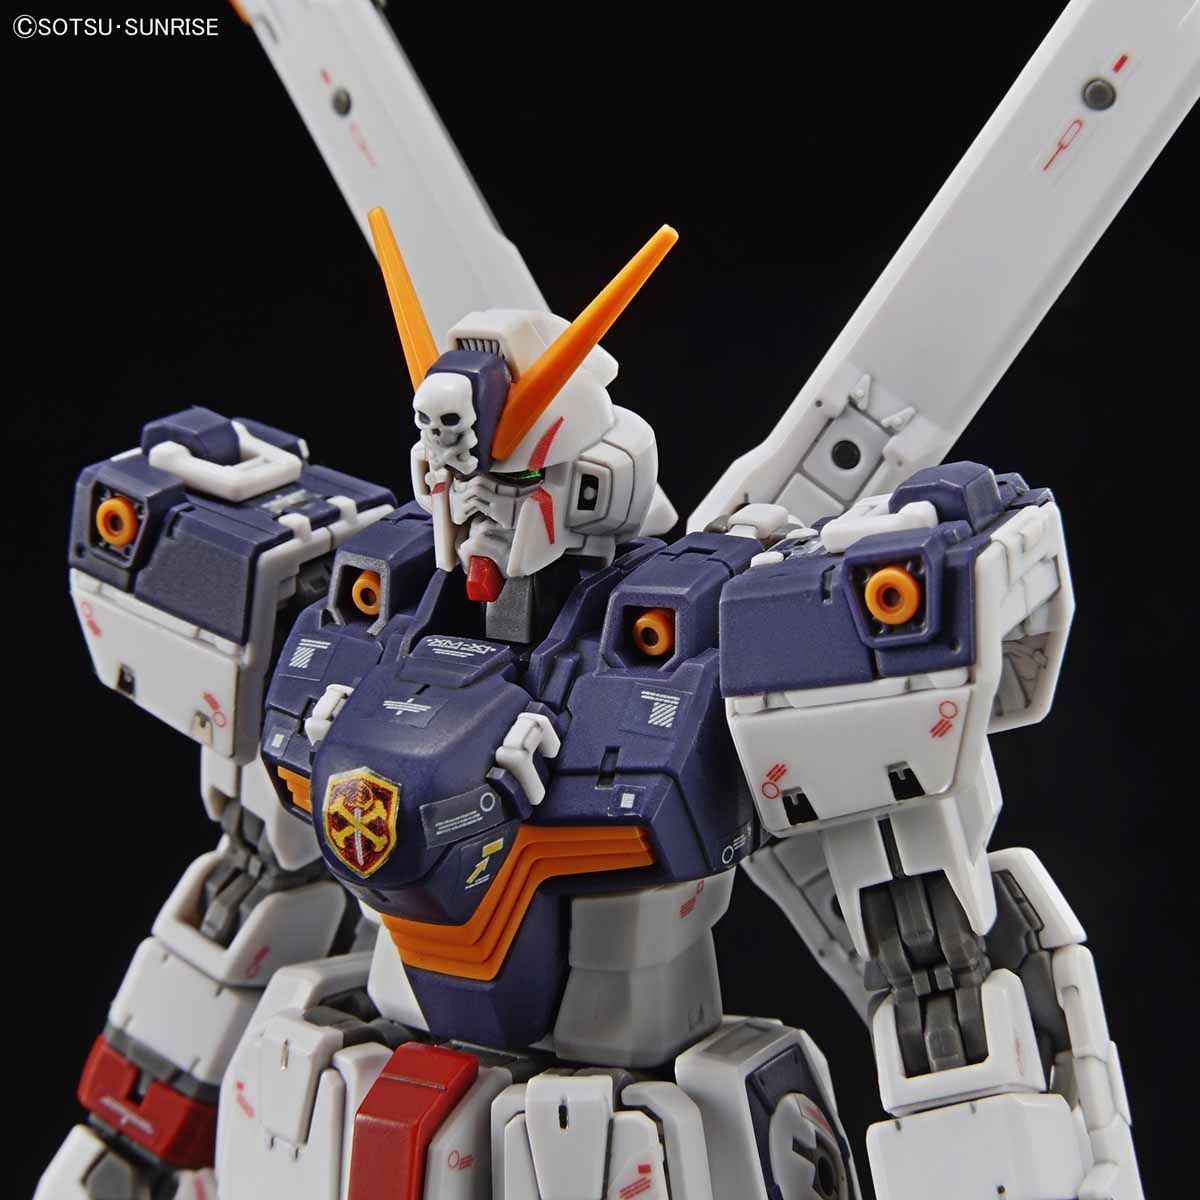 31 RG XM-X1 Crossbone Gundam